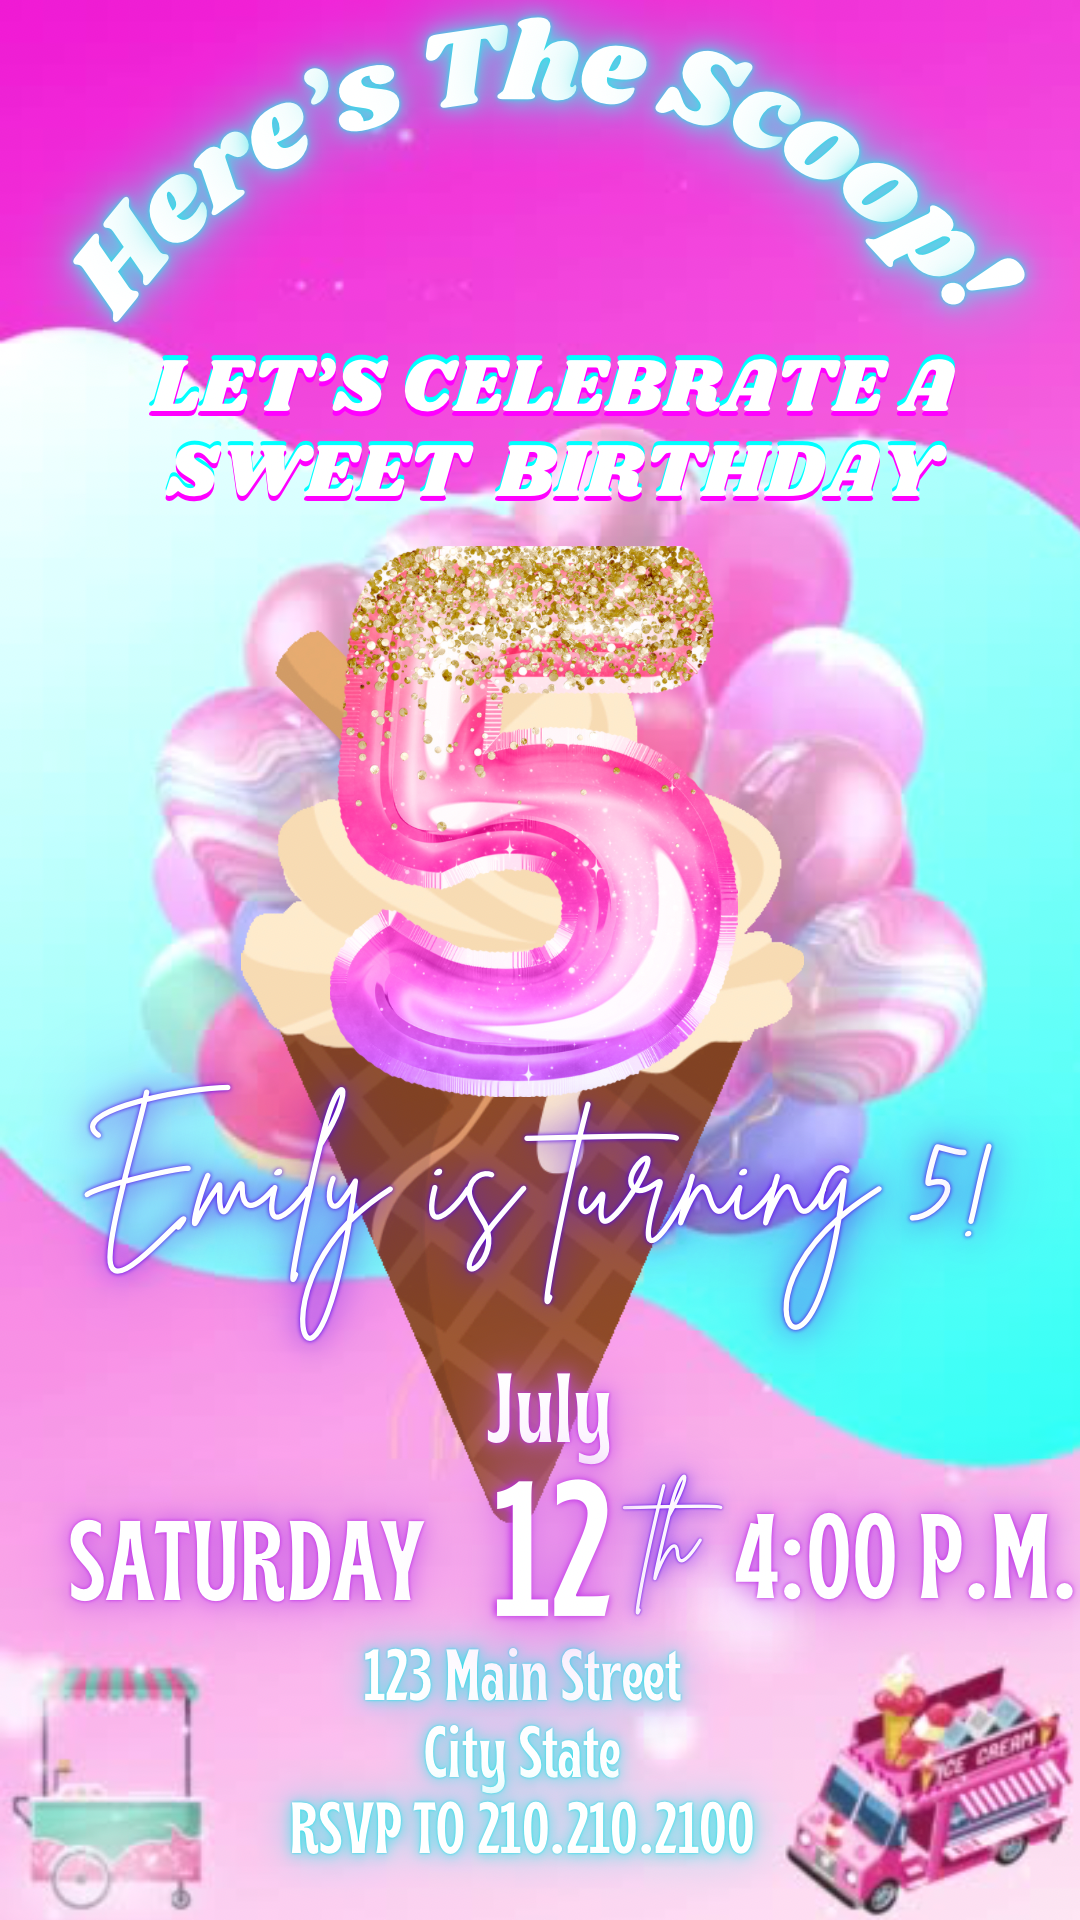 Ice Cream Invitation, 5th Birthday Ice Cream Video Invitation, Here’s the Scoop Invite